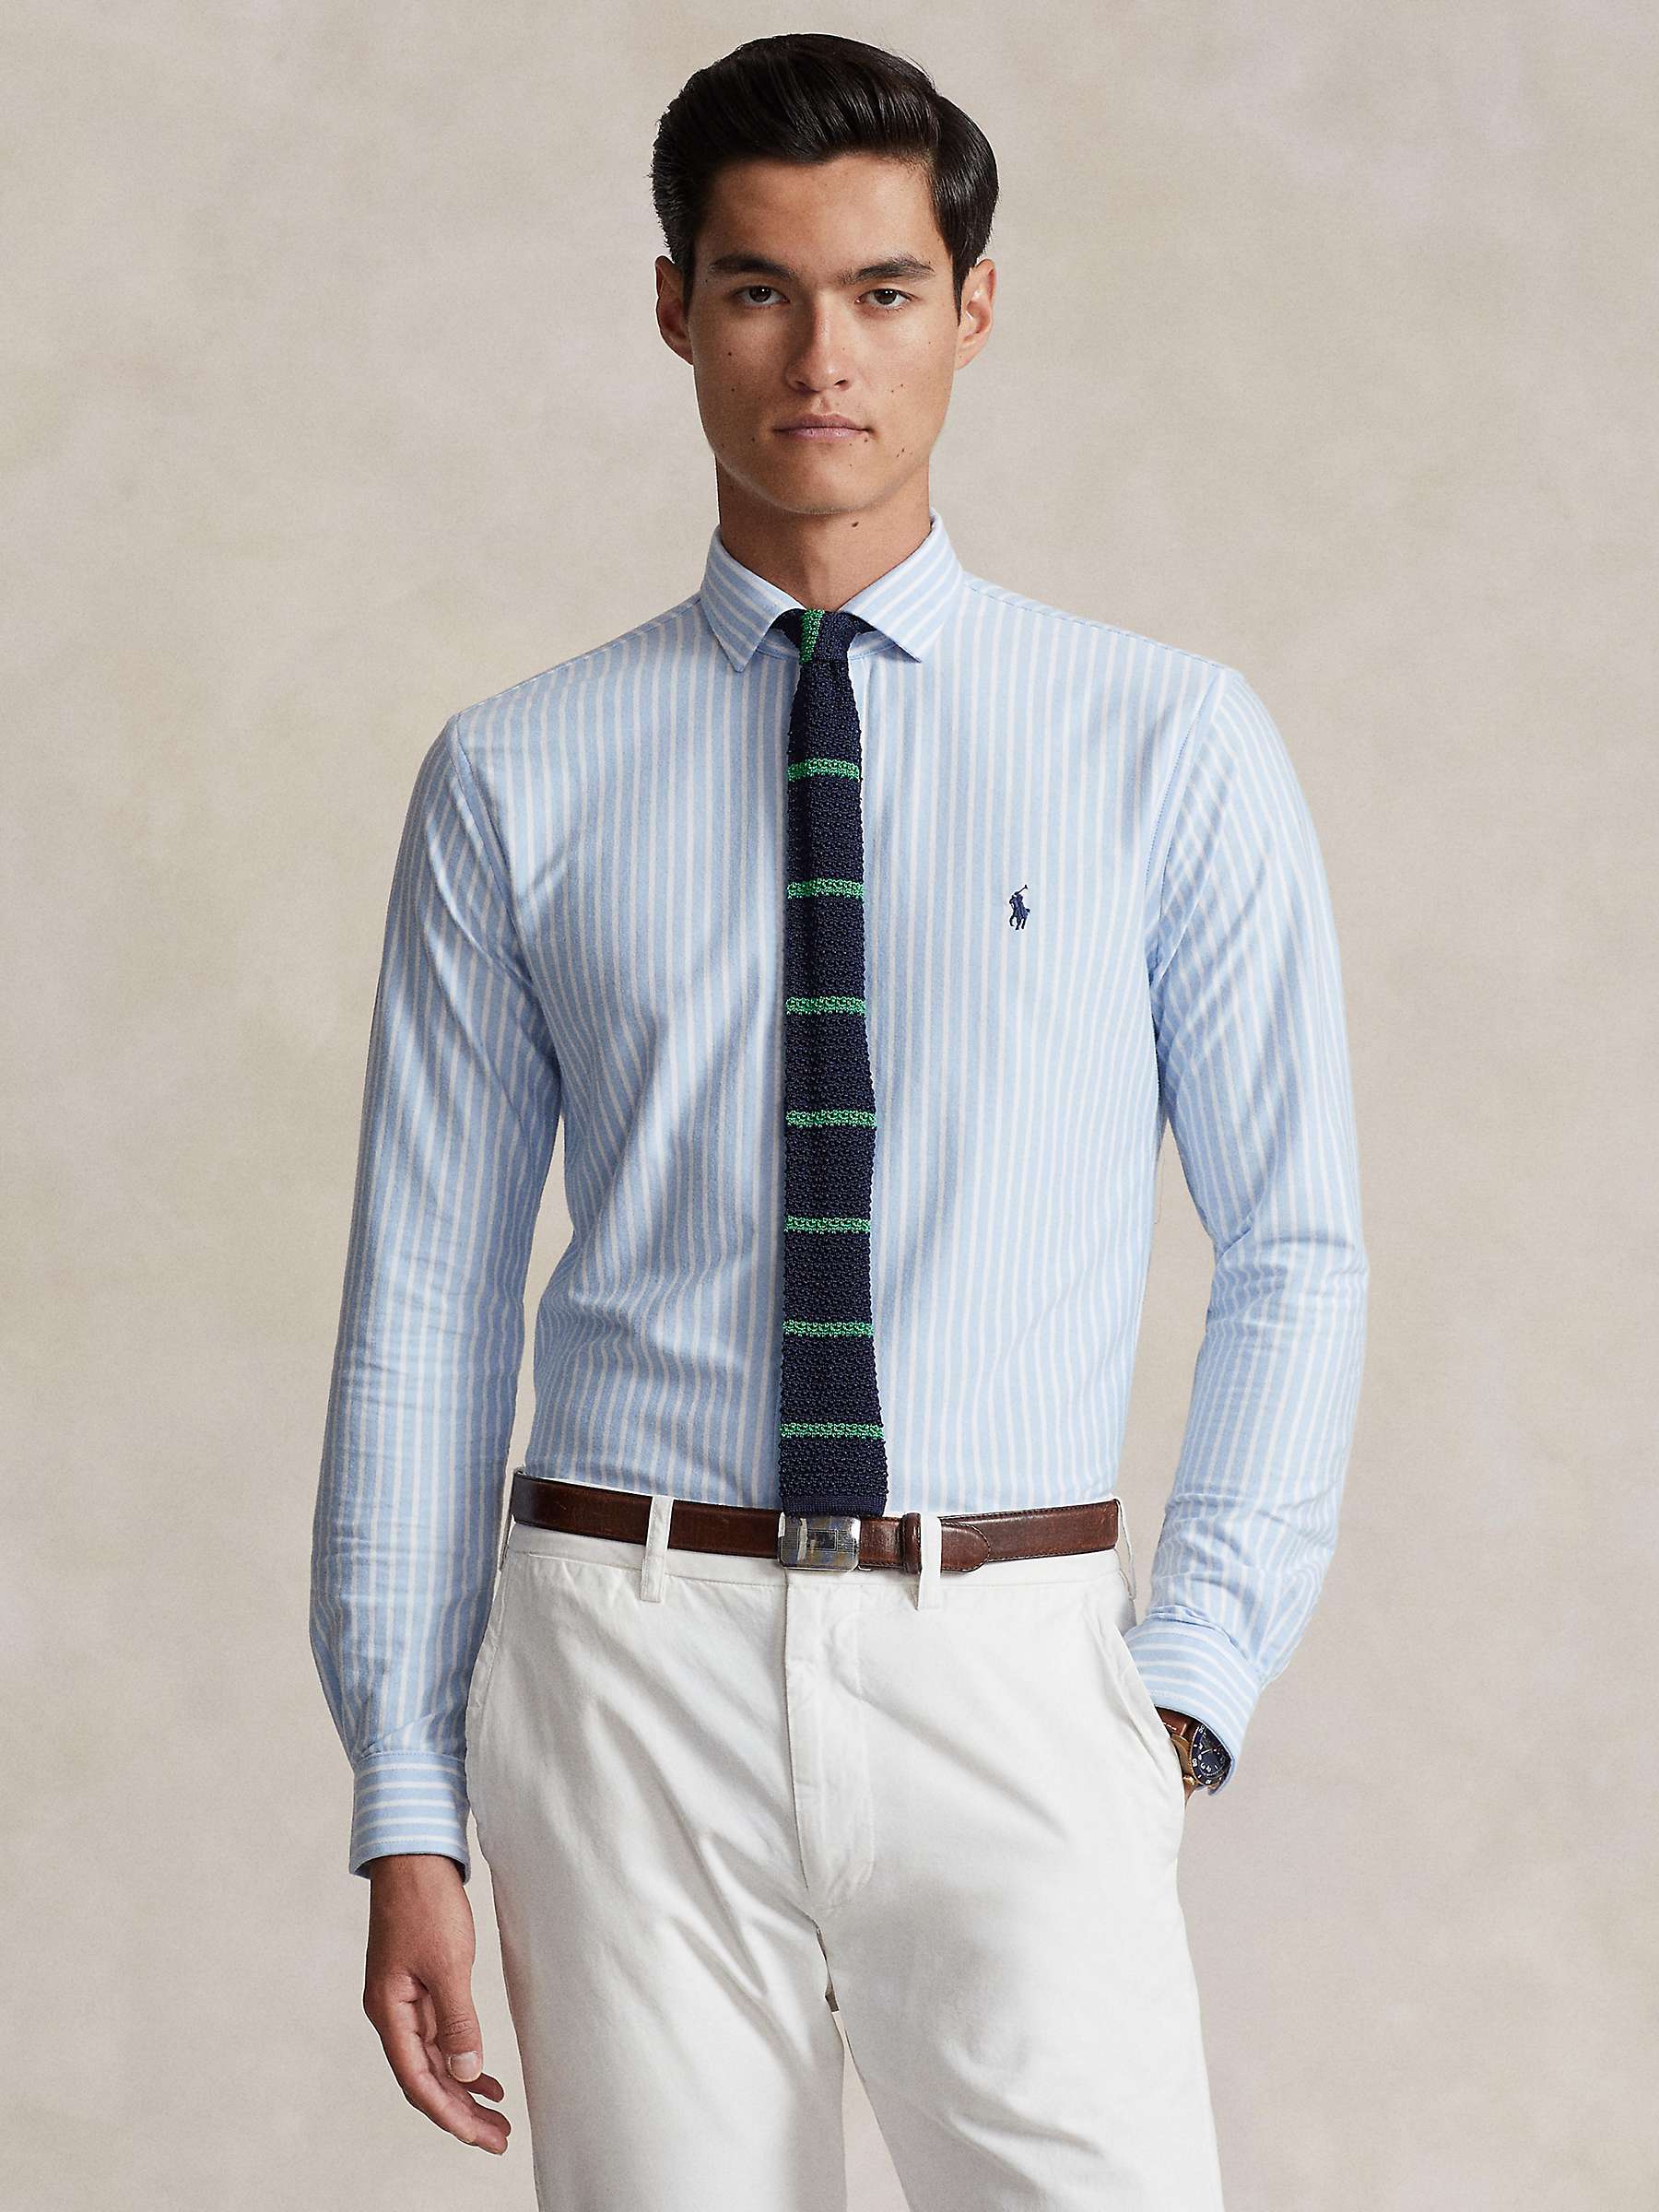 Polo Ralph Lauren Striped Jersey Shirt, Office Blue White at John Lewis ...